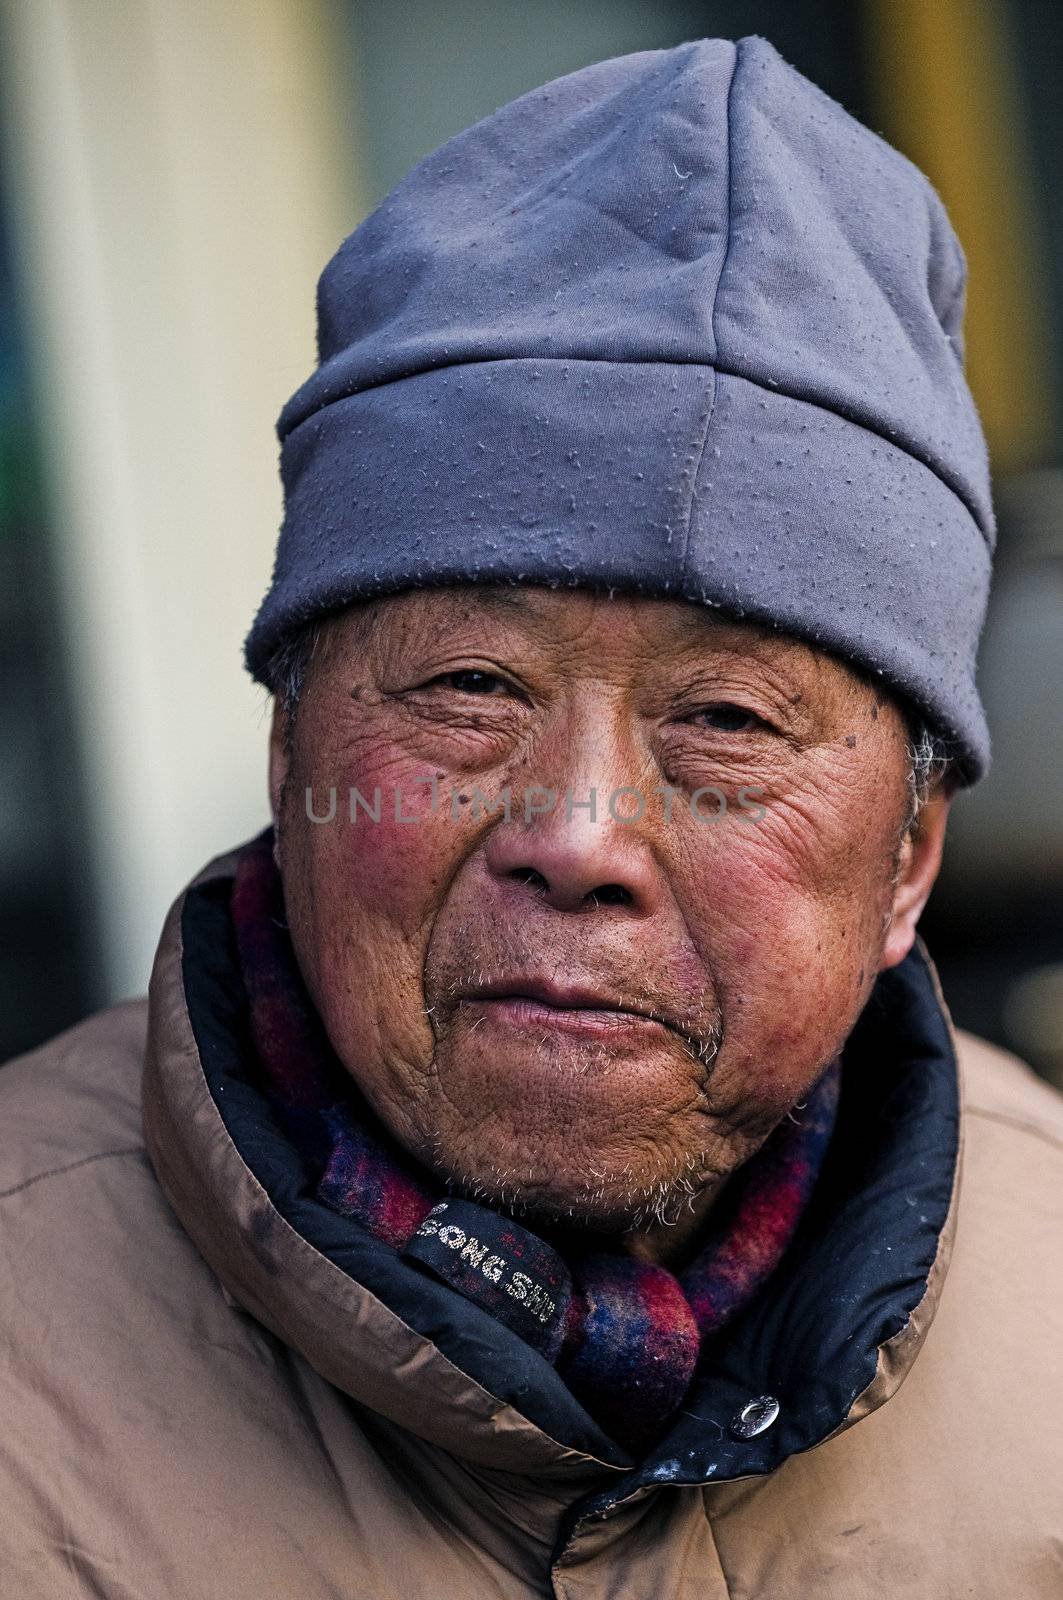 Old Chinese man by kobby_dagan